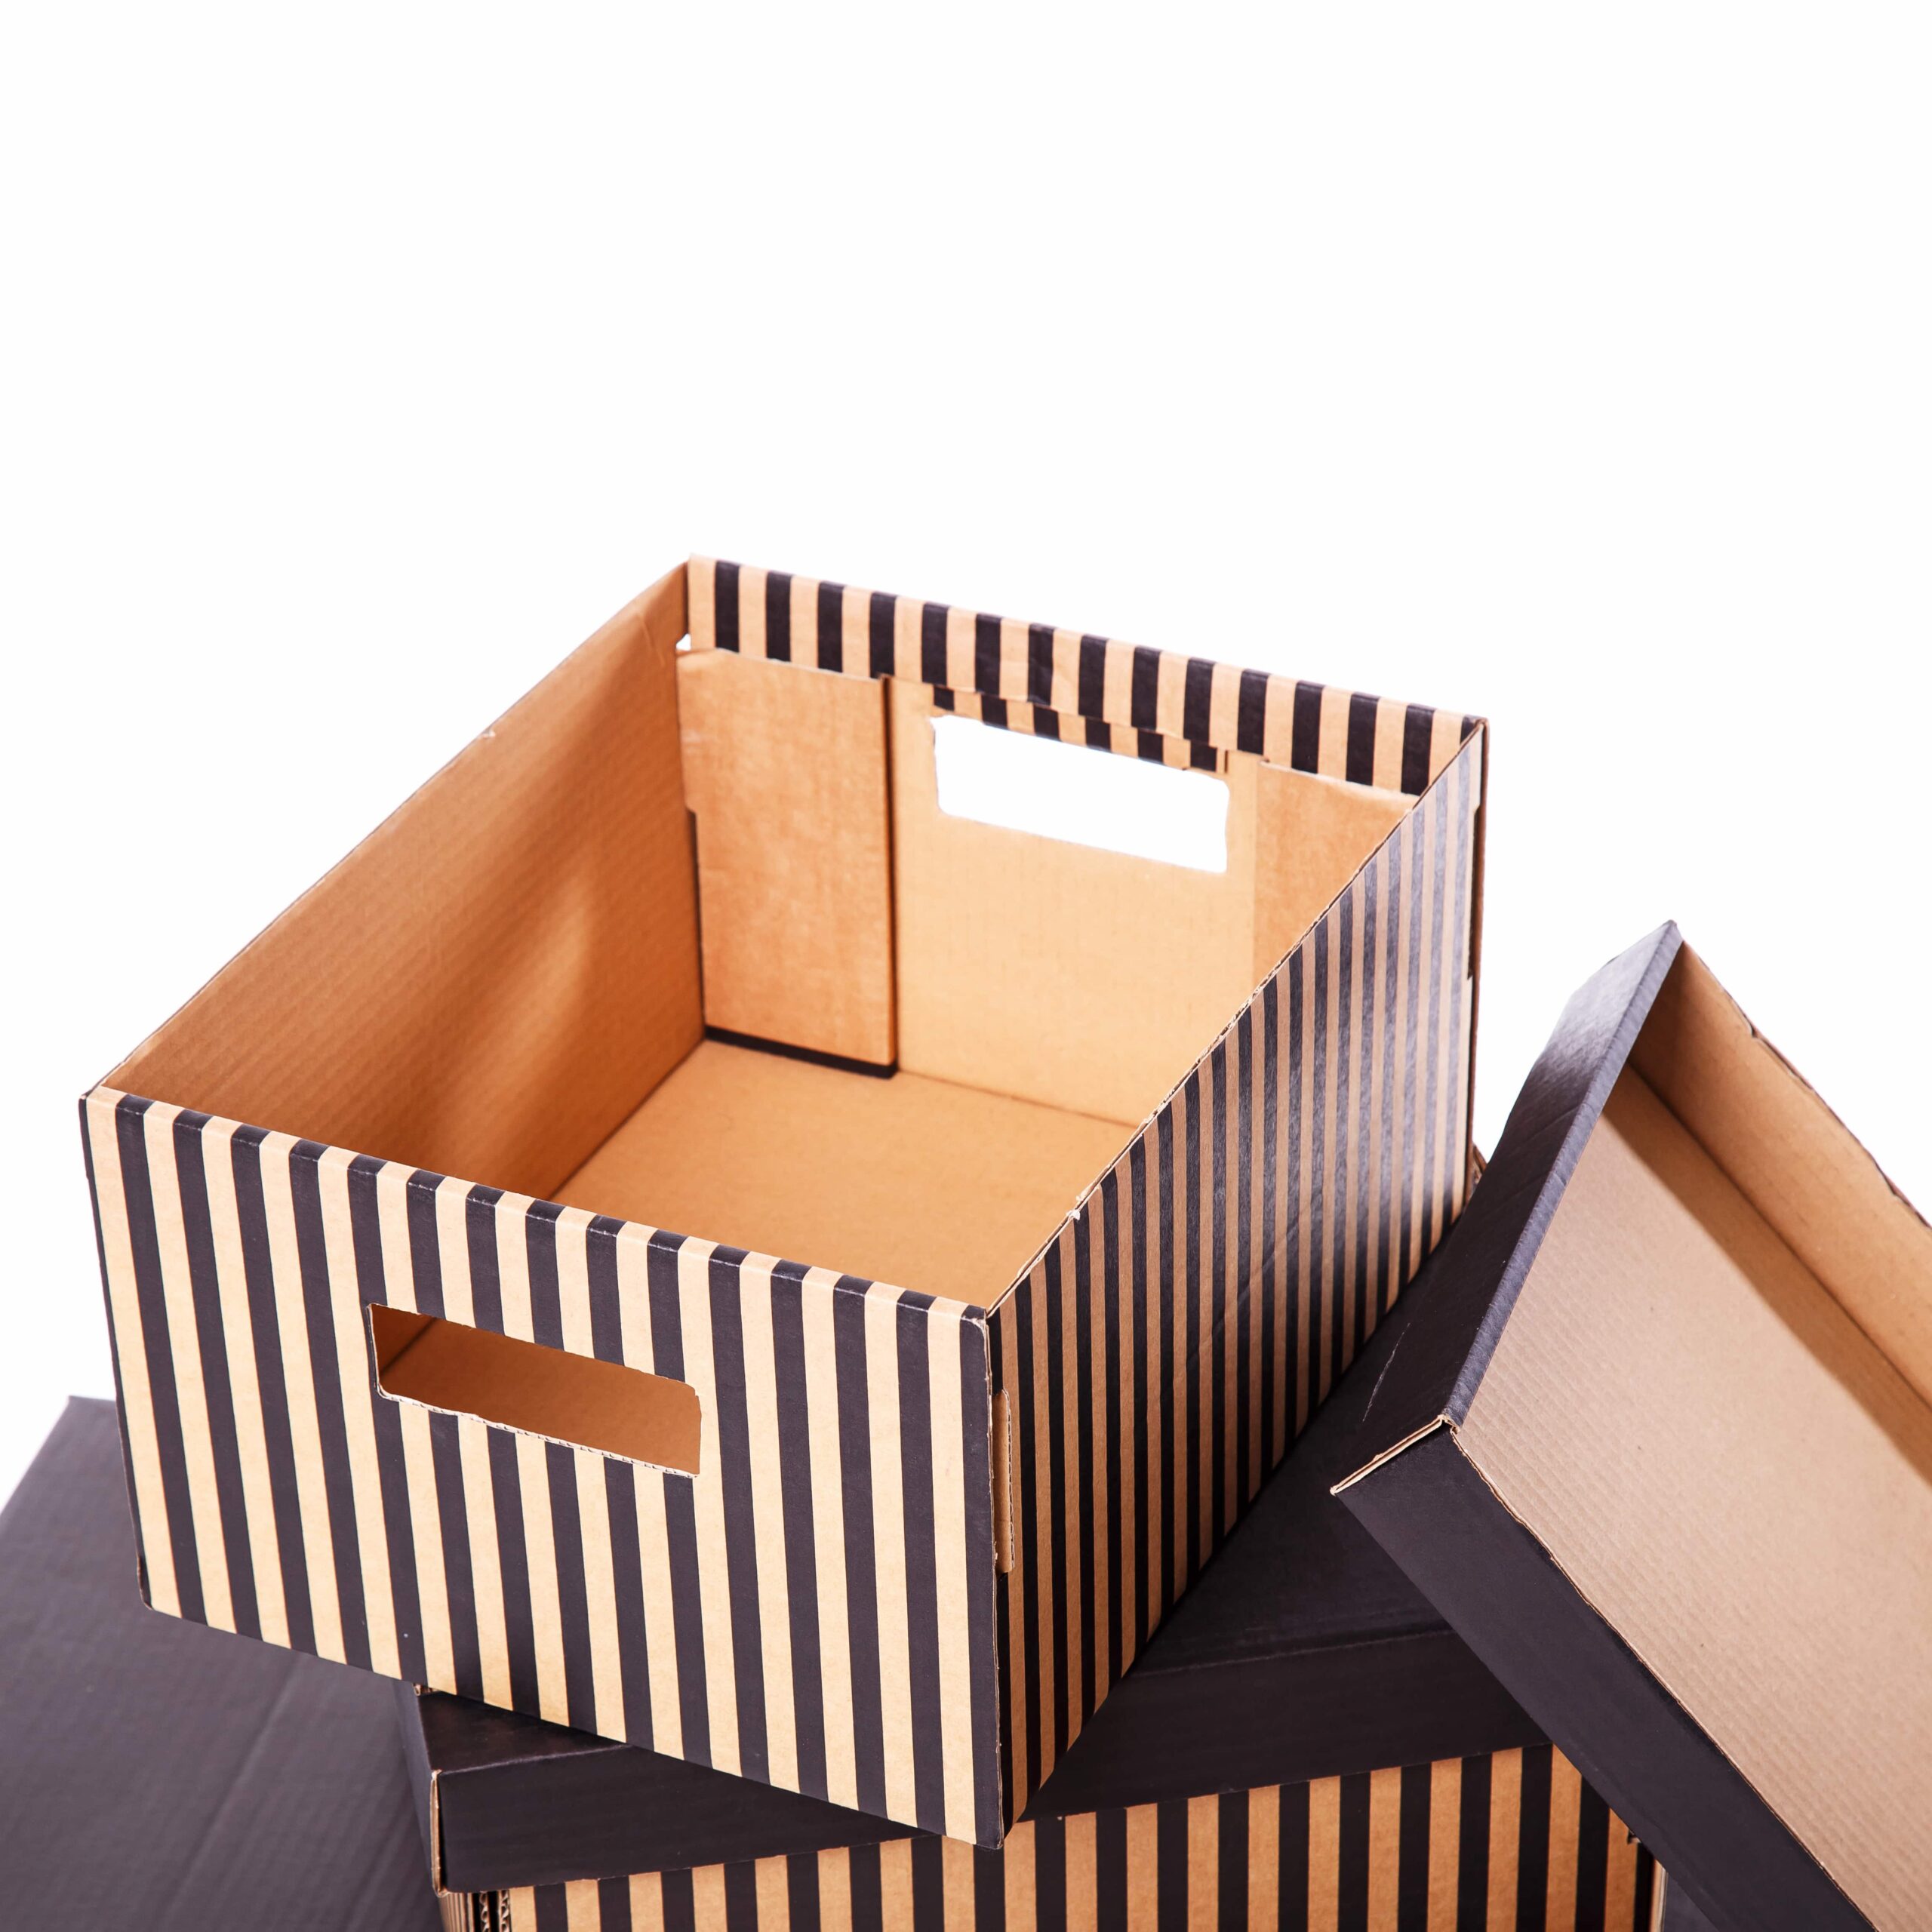 Shoe-Shipping boxes